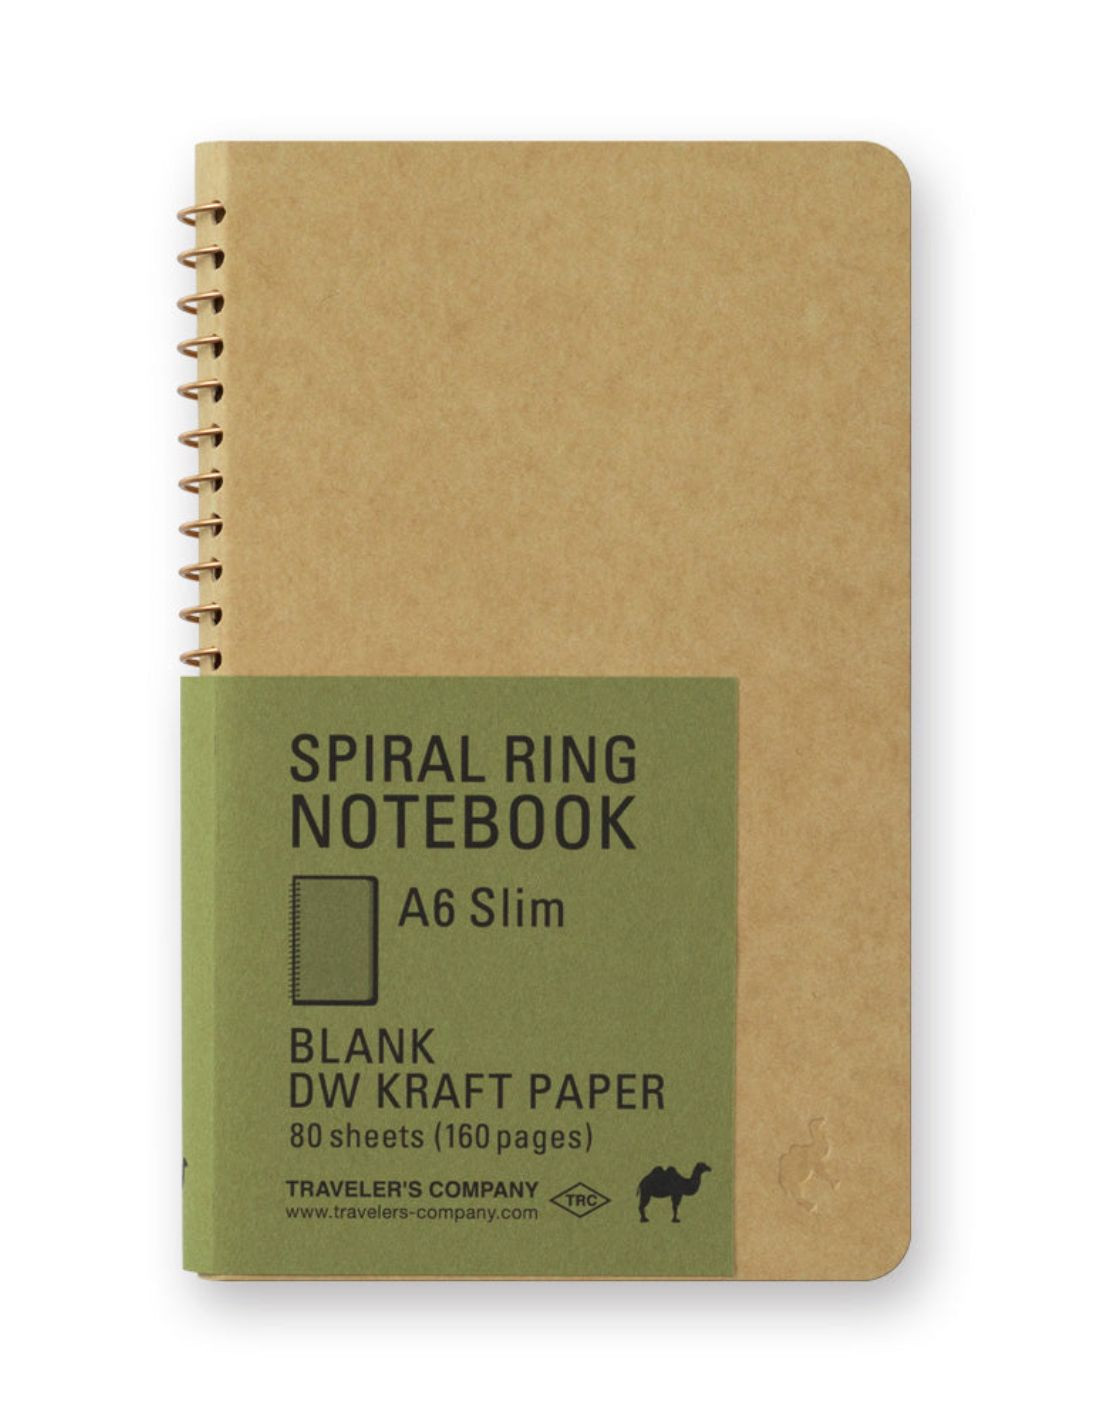 A6 Slim Blank DW Kraft Paper - Spiral Ring Notebook - Traveler's Company